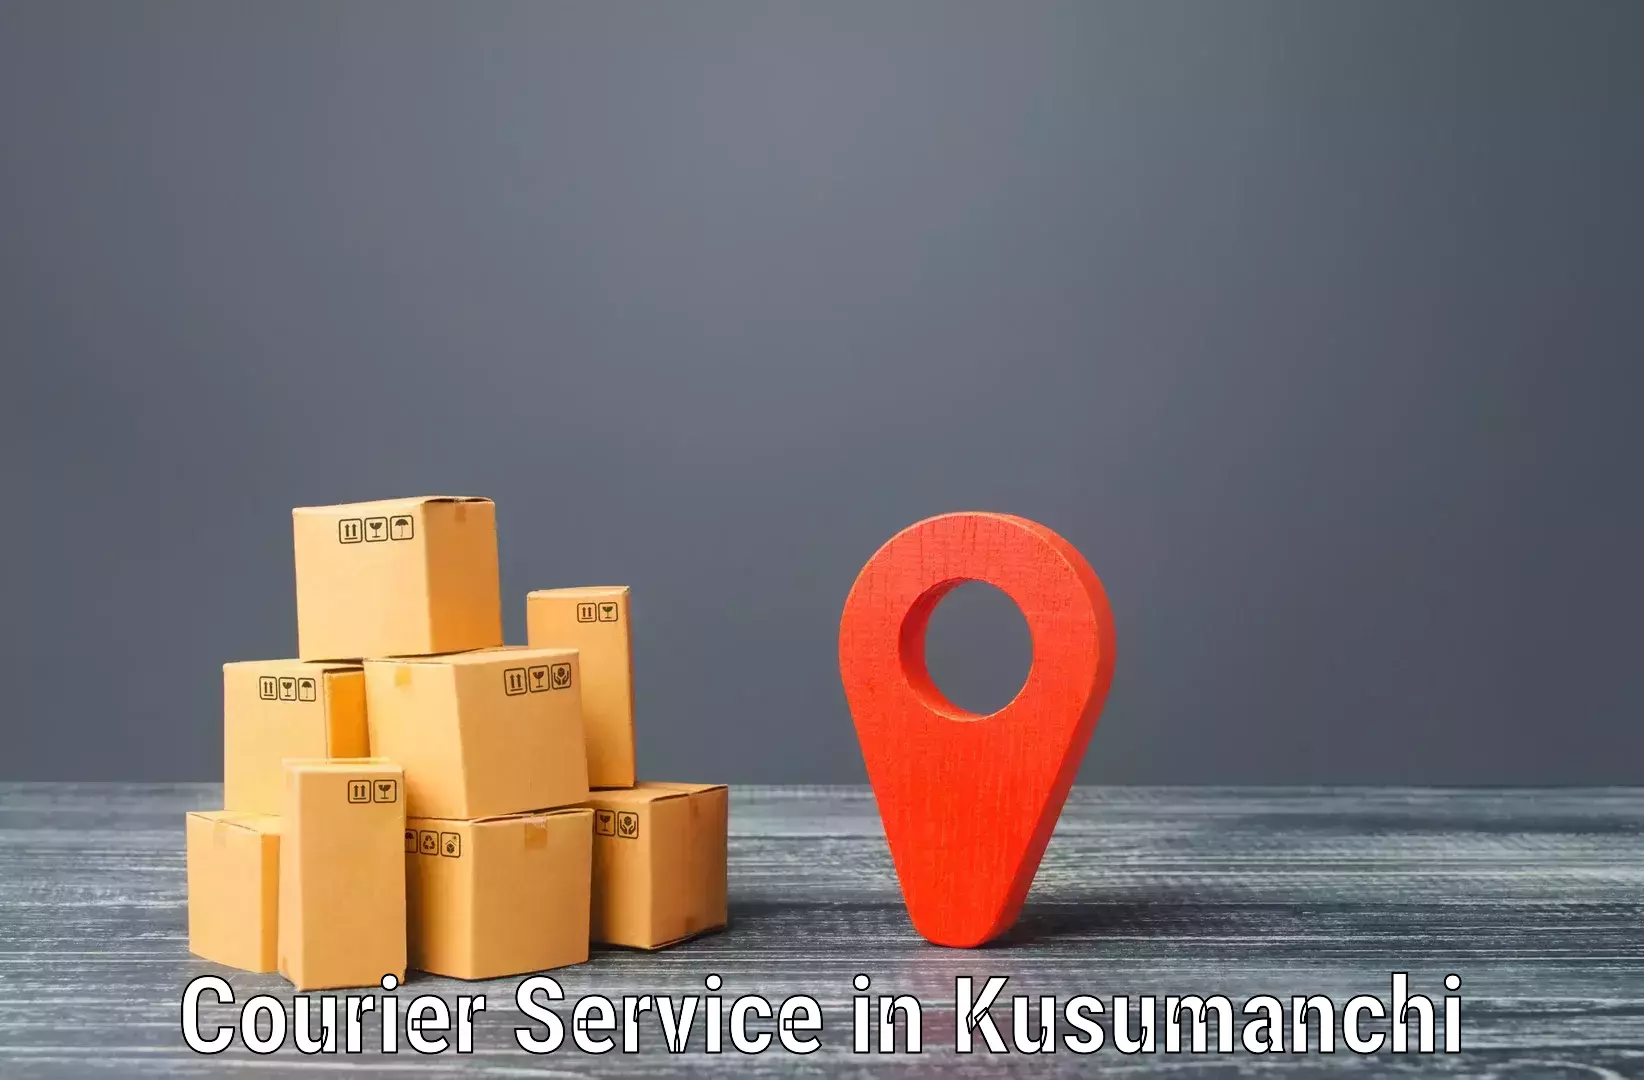 Efficient cargo services in Kusumanchi